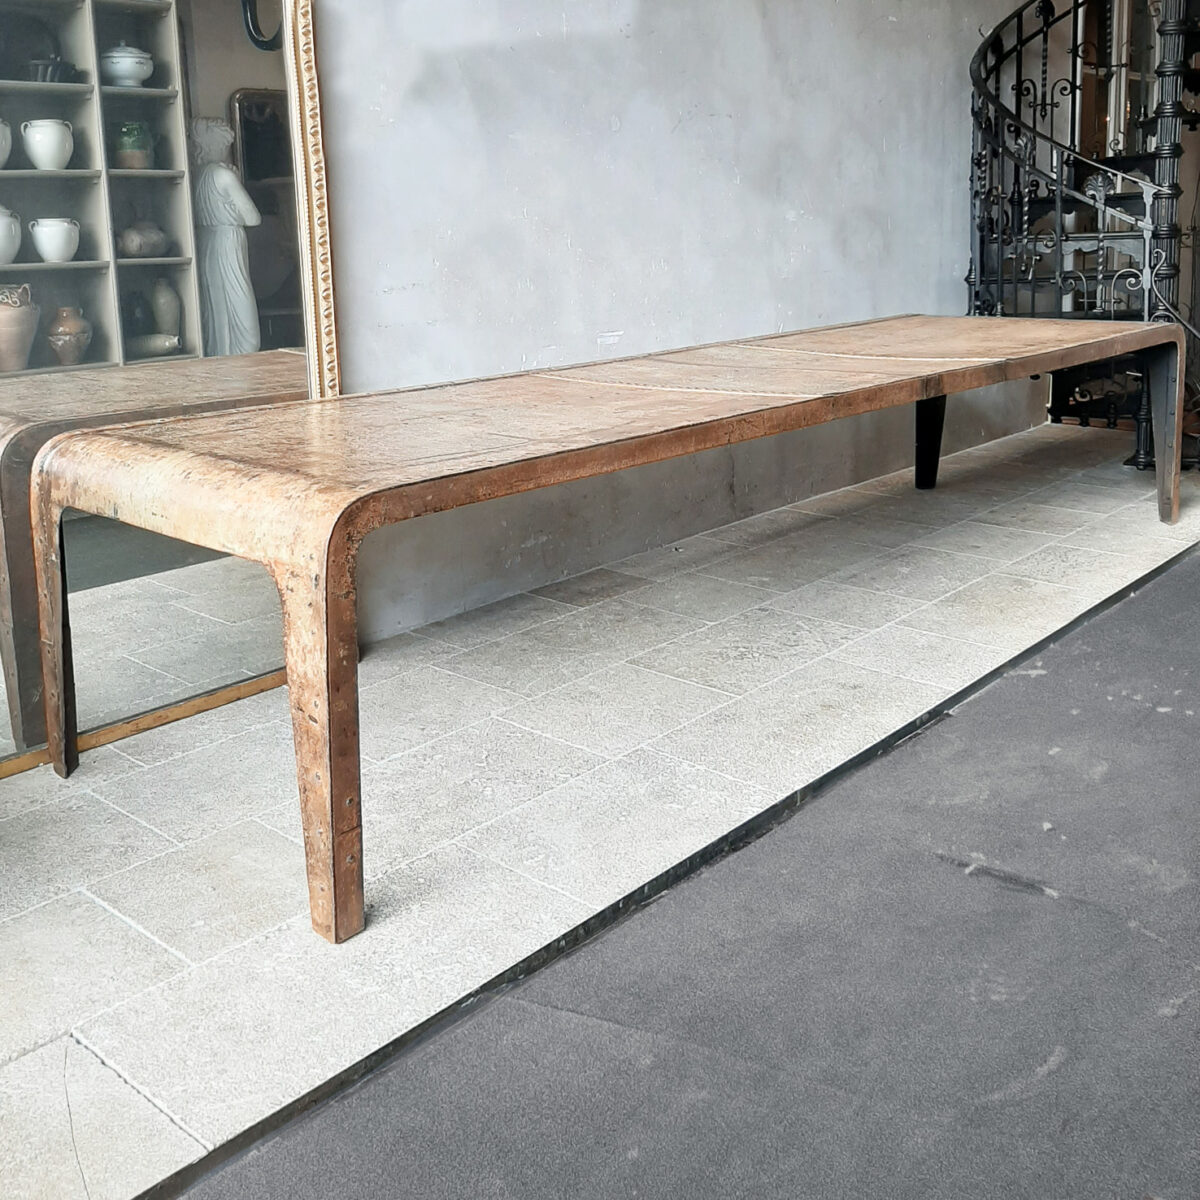 Malaise vacuüm Misverstand Industriële metalen tafel 4 meter lang x 1 meter breed - Piet Jonker